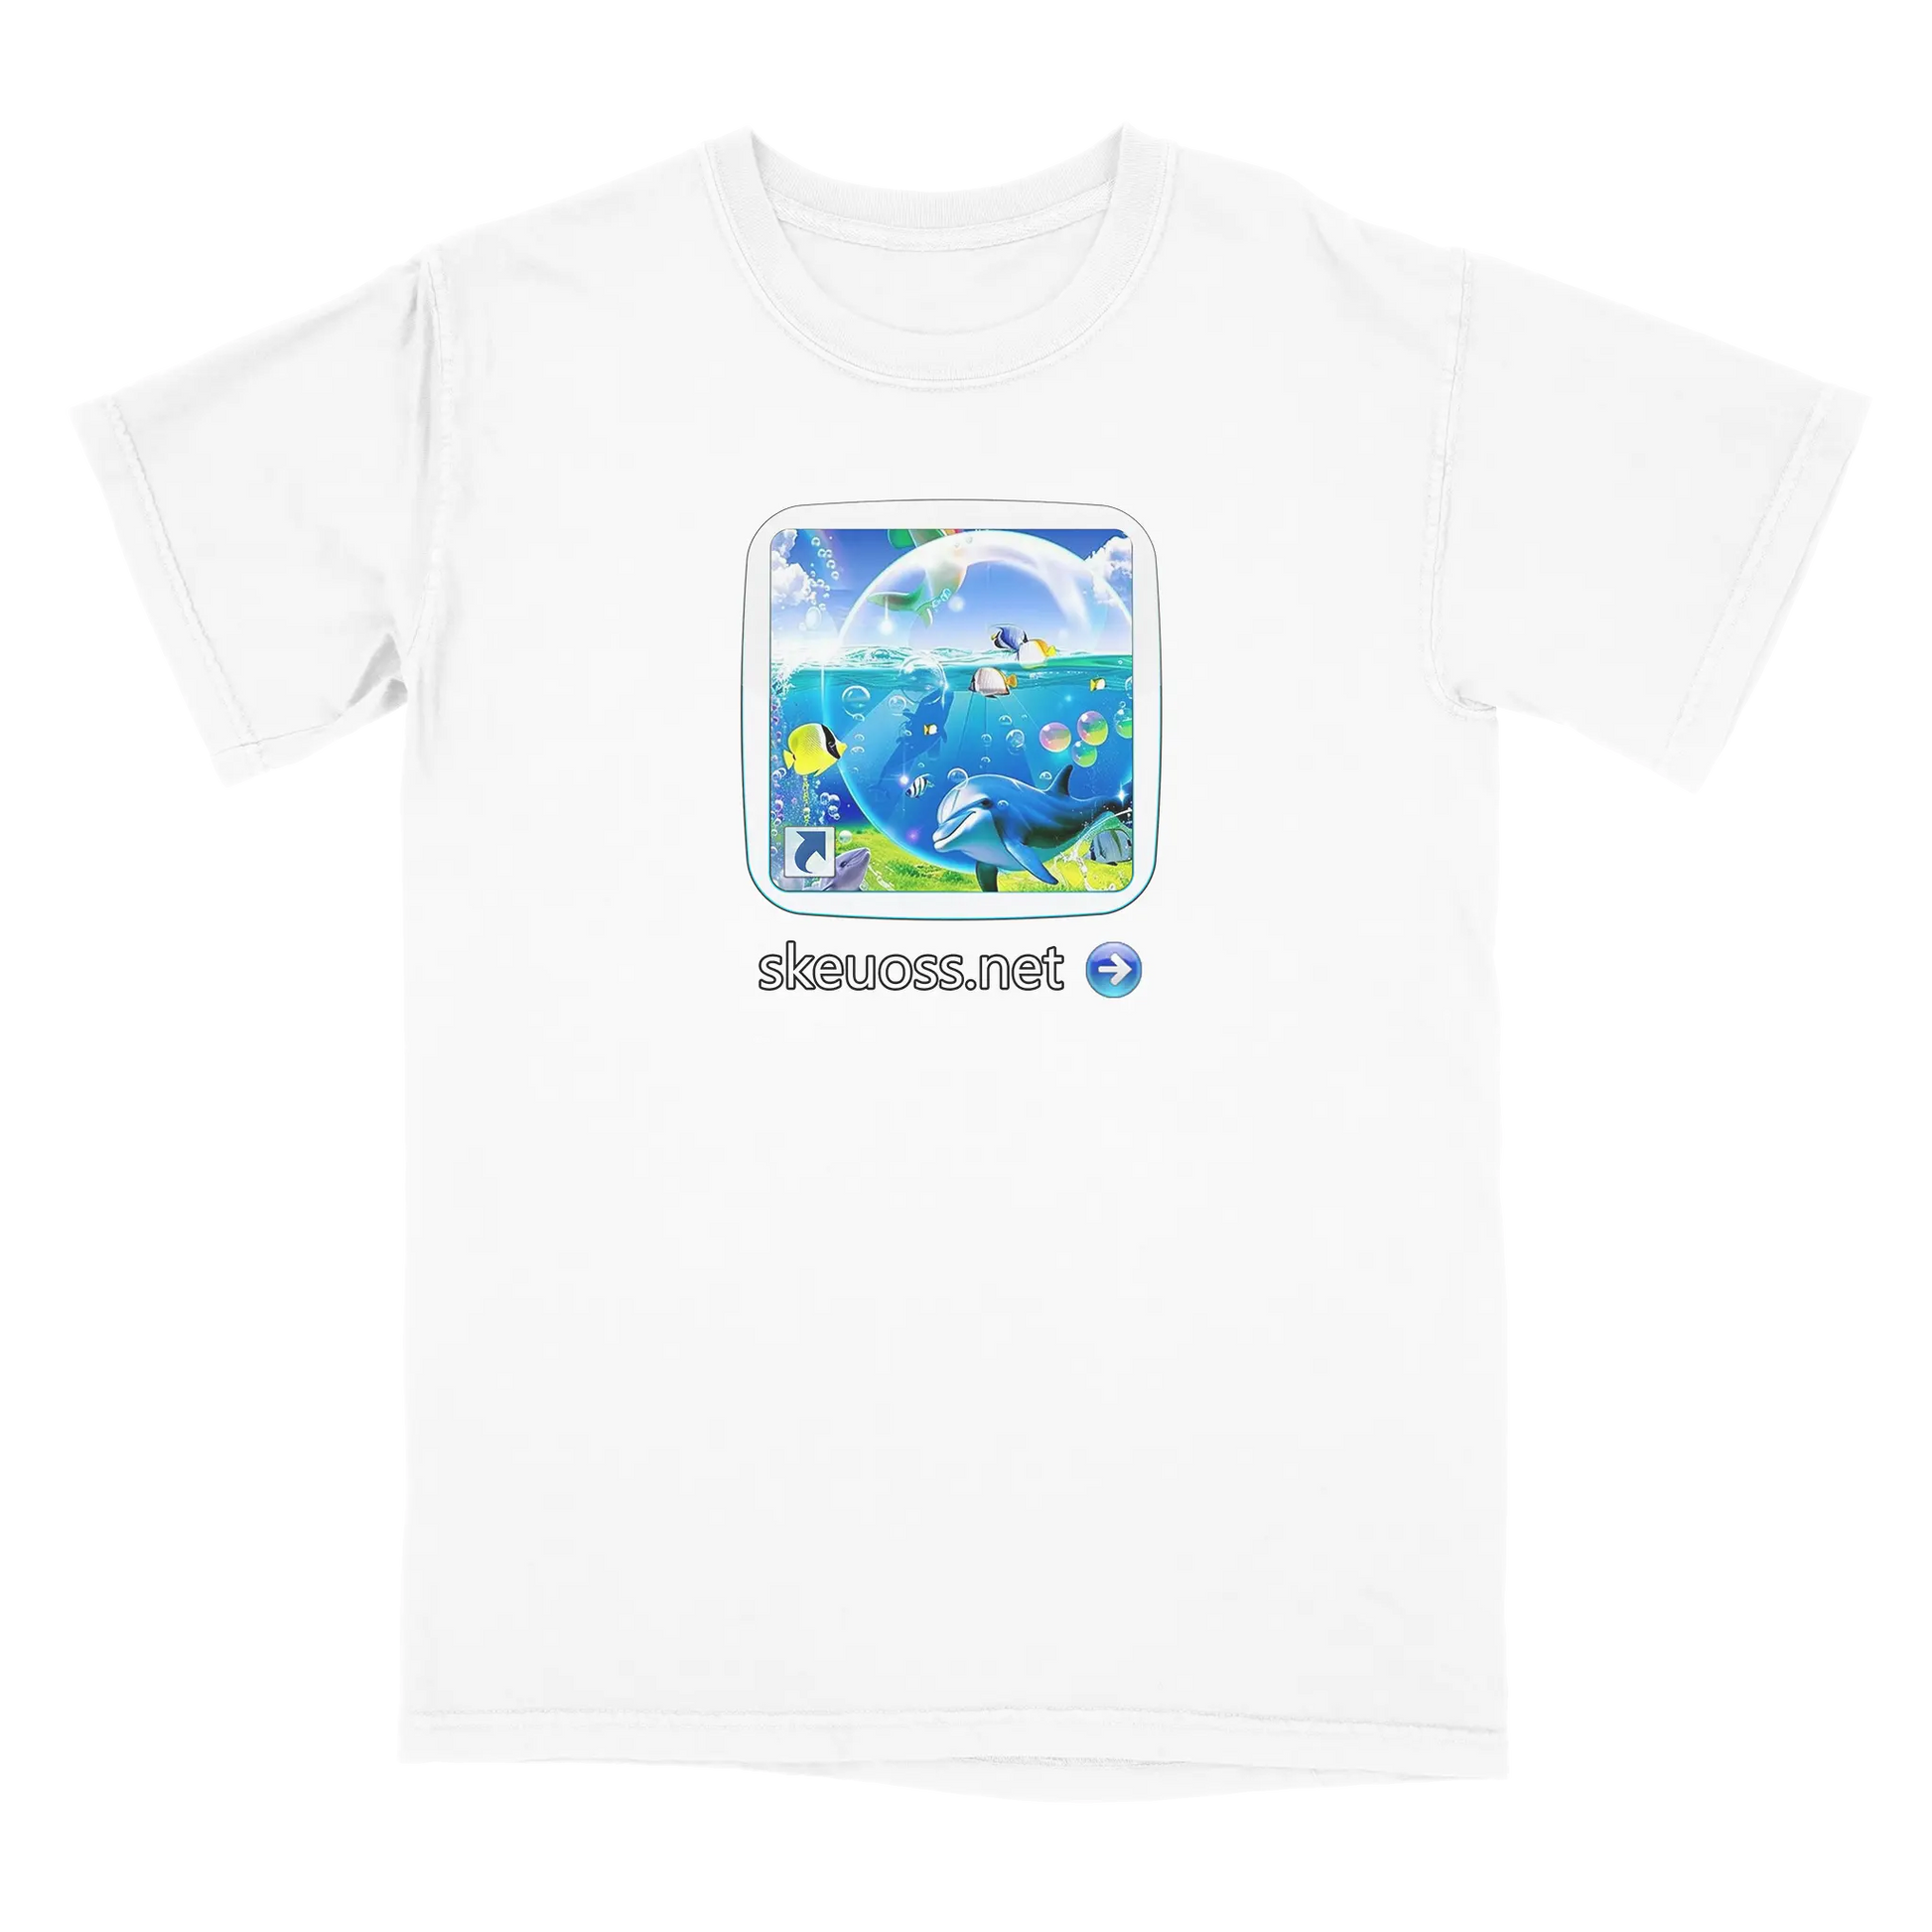 Frutiger Aero T-shirt - User Login Collection - User 292